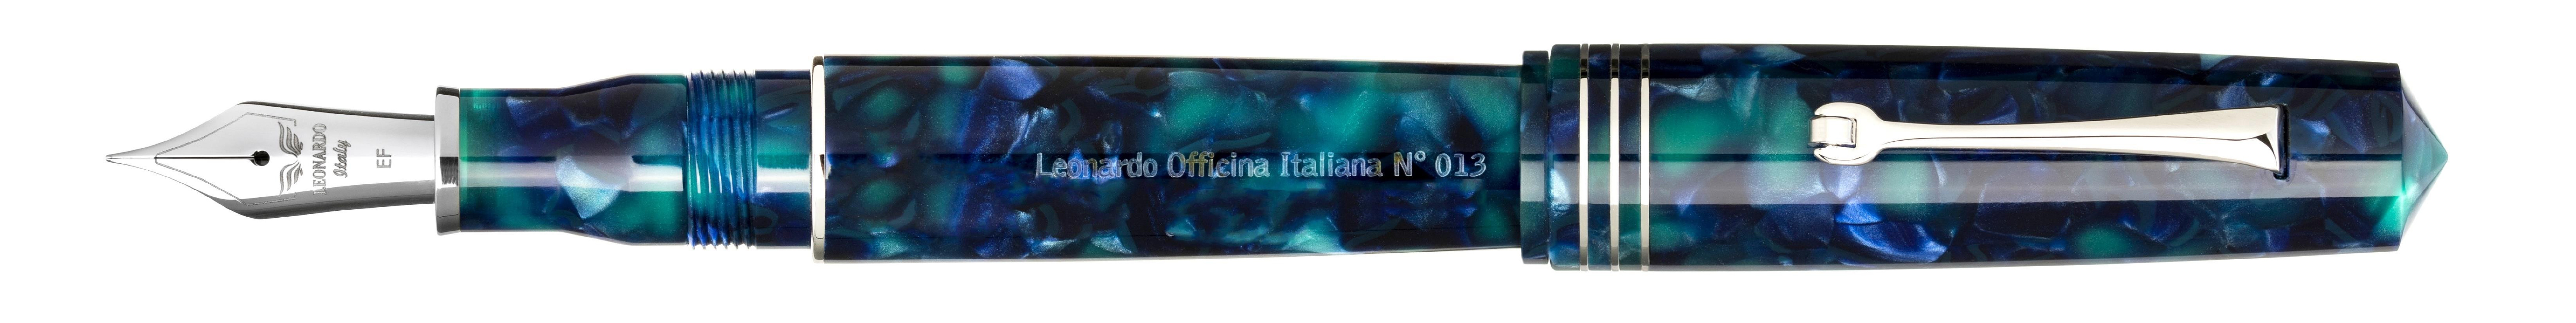 Leonardo Officina Italiana Momento Zero Caraibi Grande Fountain pen